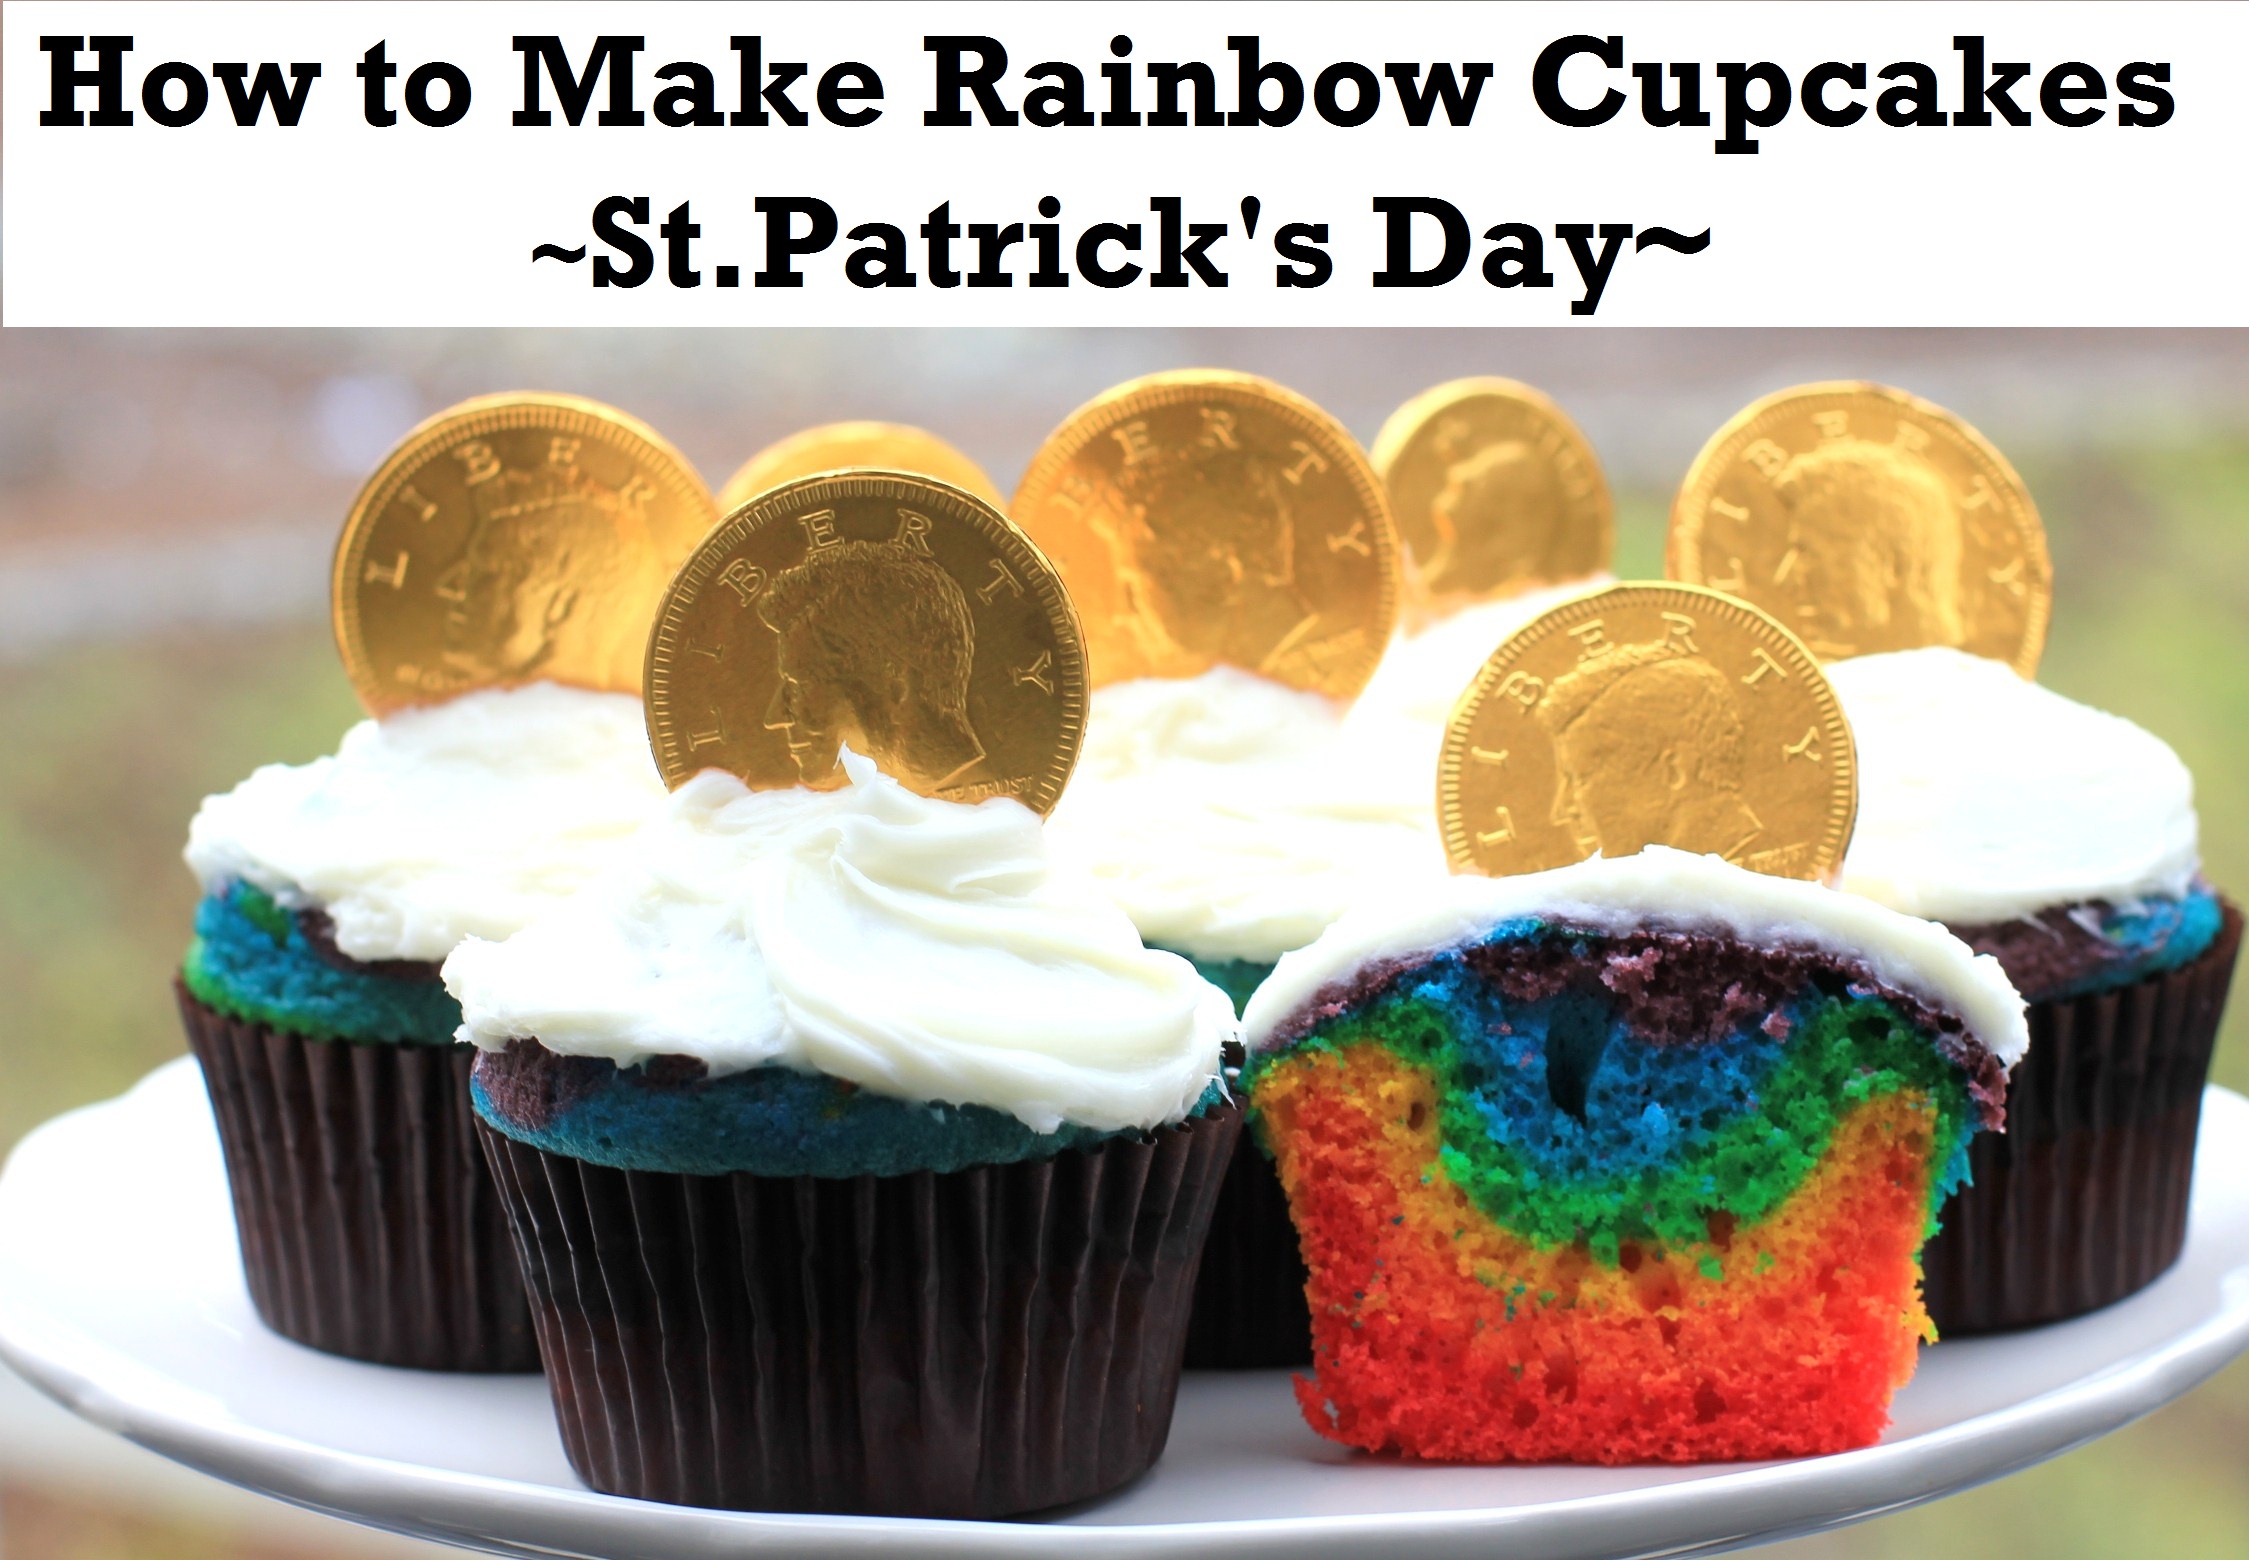 St. Patrick’s Day Recipe: How to Make Rainbow Cupcakes